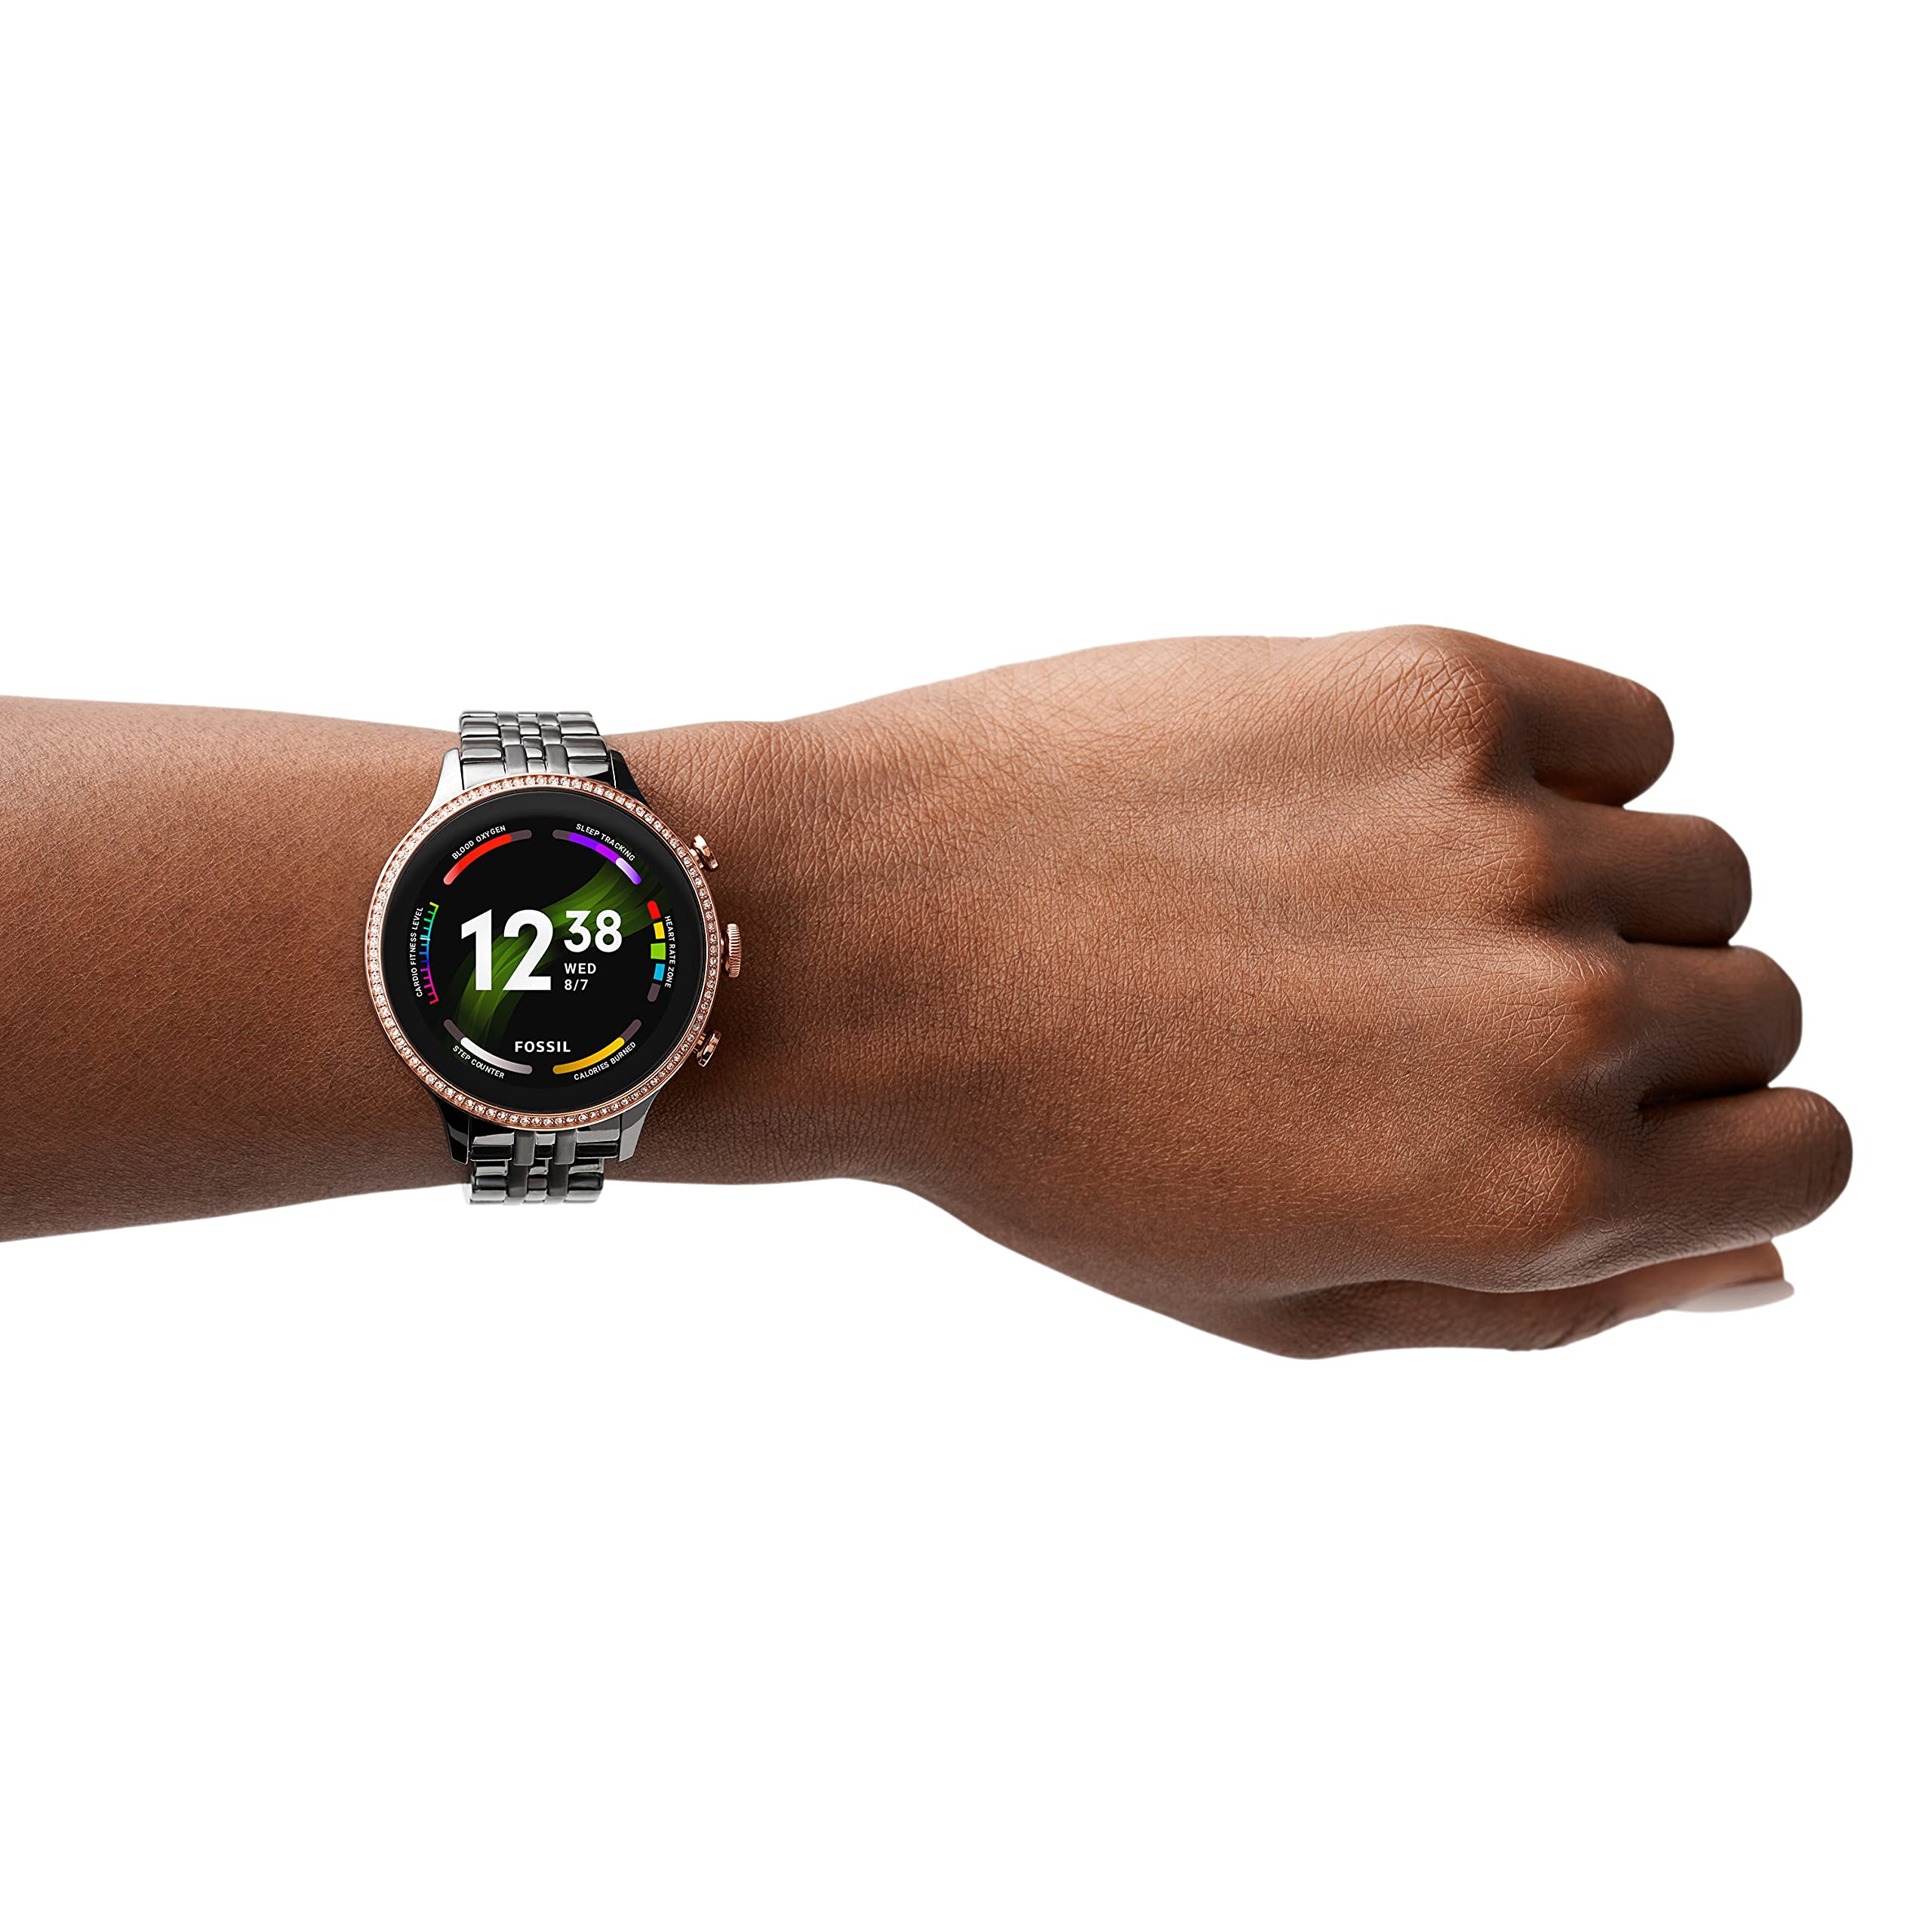 Fossil Women's Gen 6 42mm Touchscreen Smart Watch with Alexa Built-In, Fitness Tracker, Sleep Tracker, Heart Rate Monitor, GPS, Speaker, Music Control, Smartphone Notifications